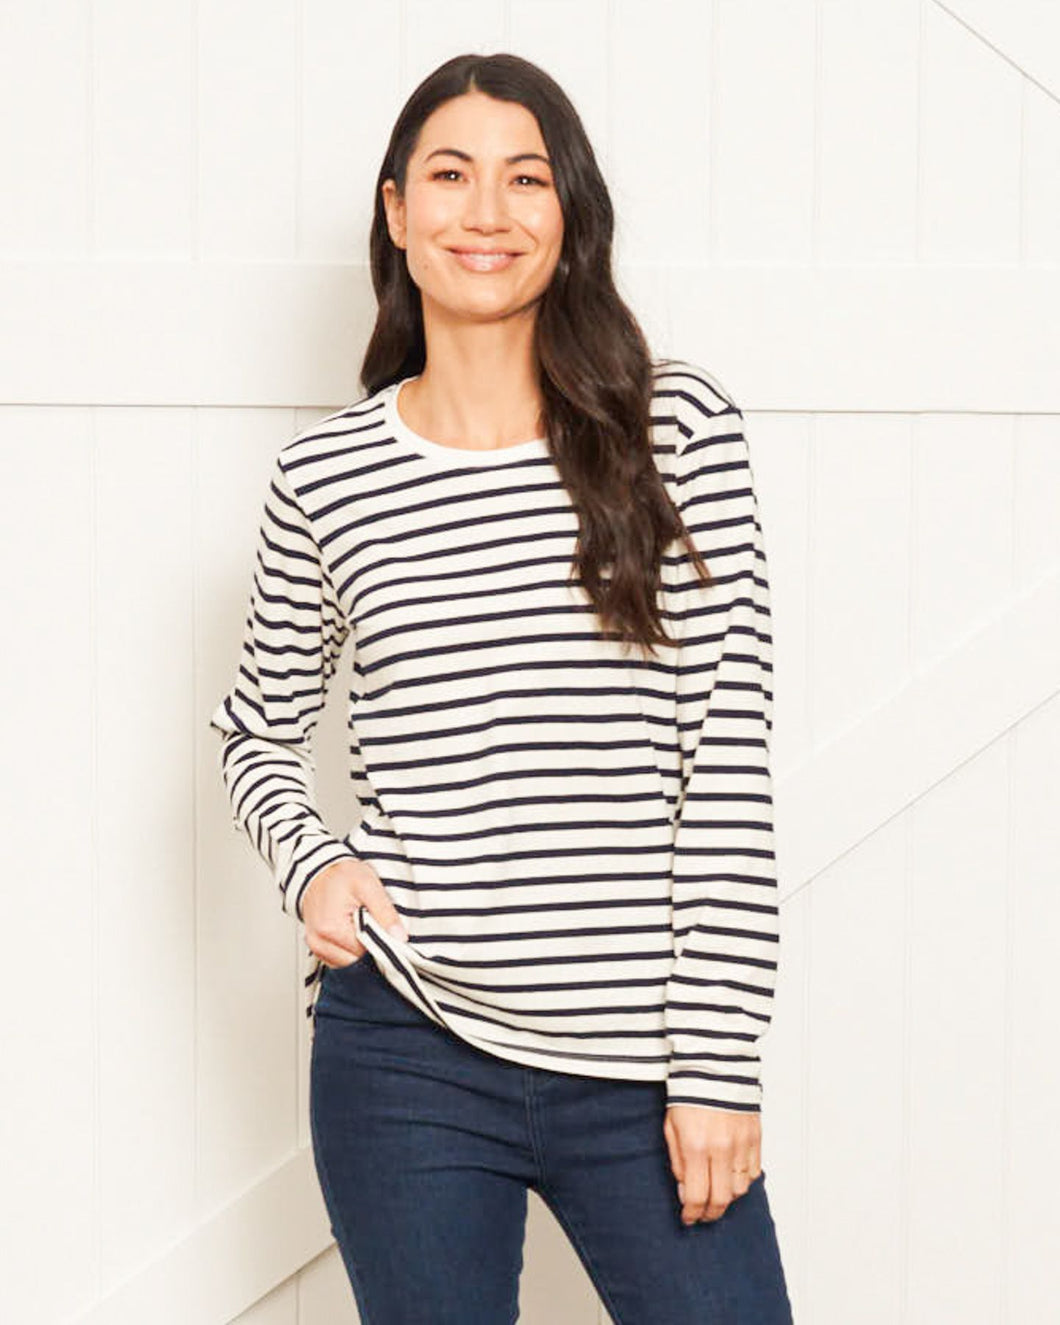 Sydney Long Sleeve Top - Blue/White Stripe